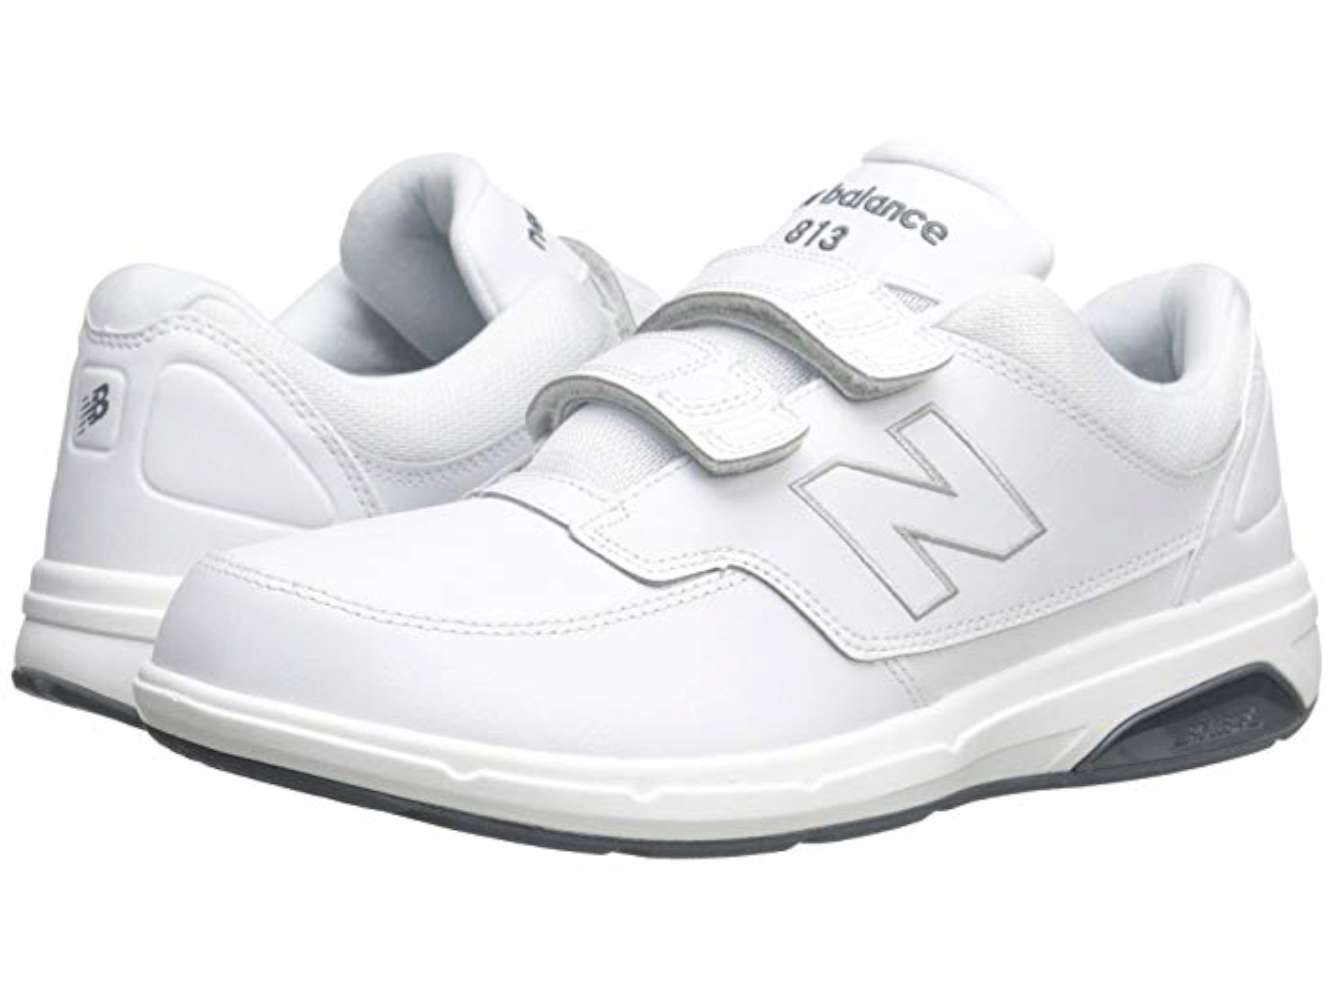 New Balance Mens Walking Marche Leather Low Top Walking, White, Size 10.0  888546858855 | eBay